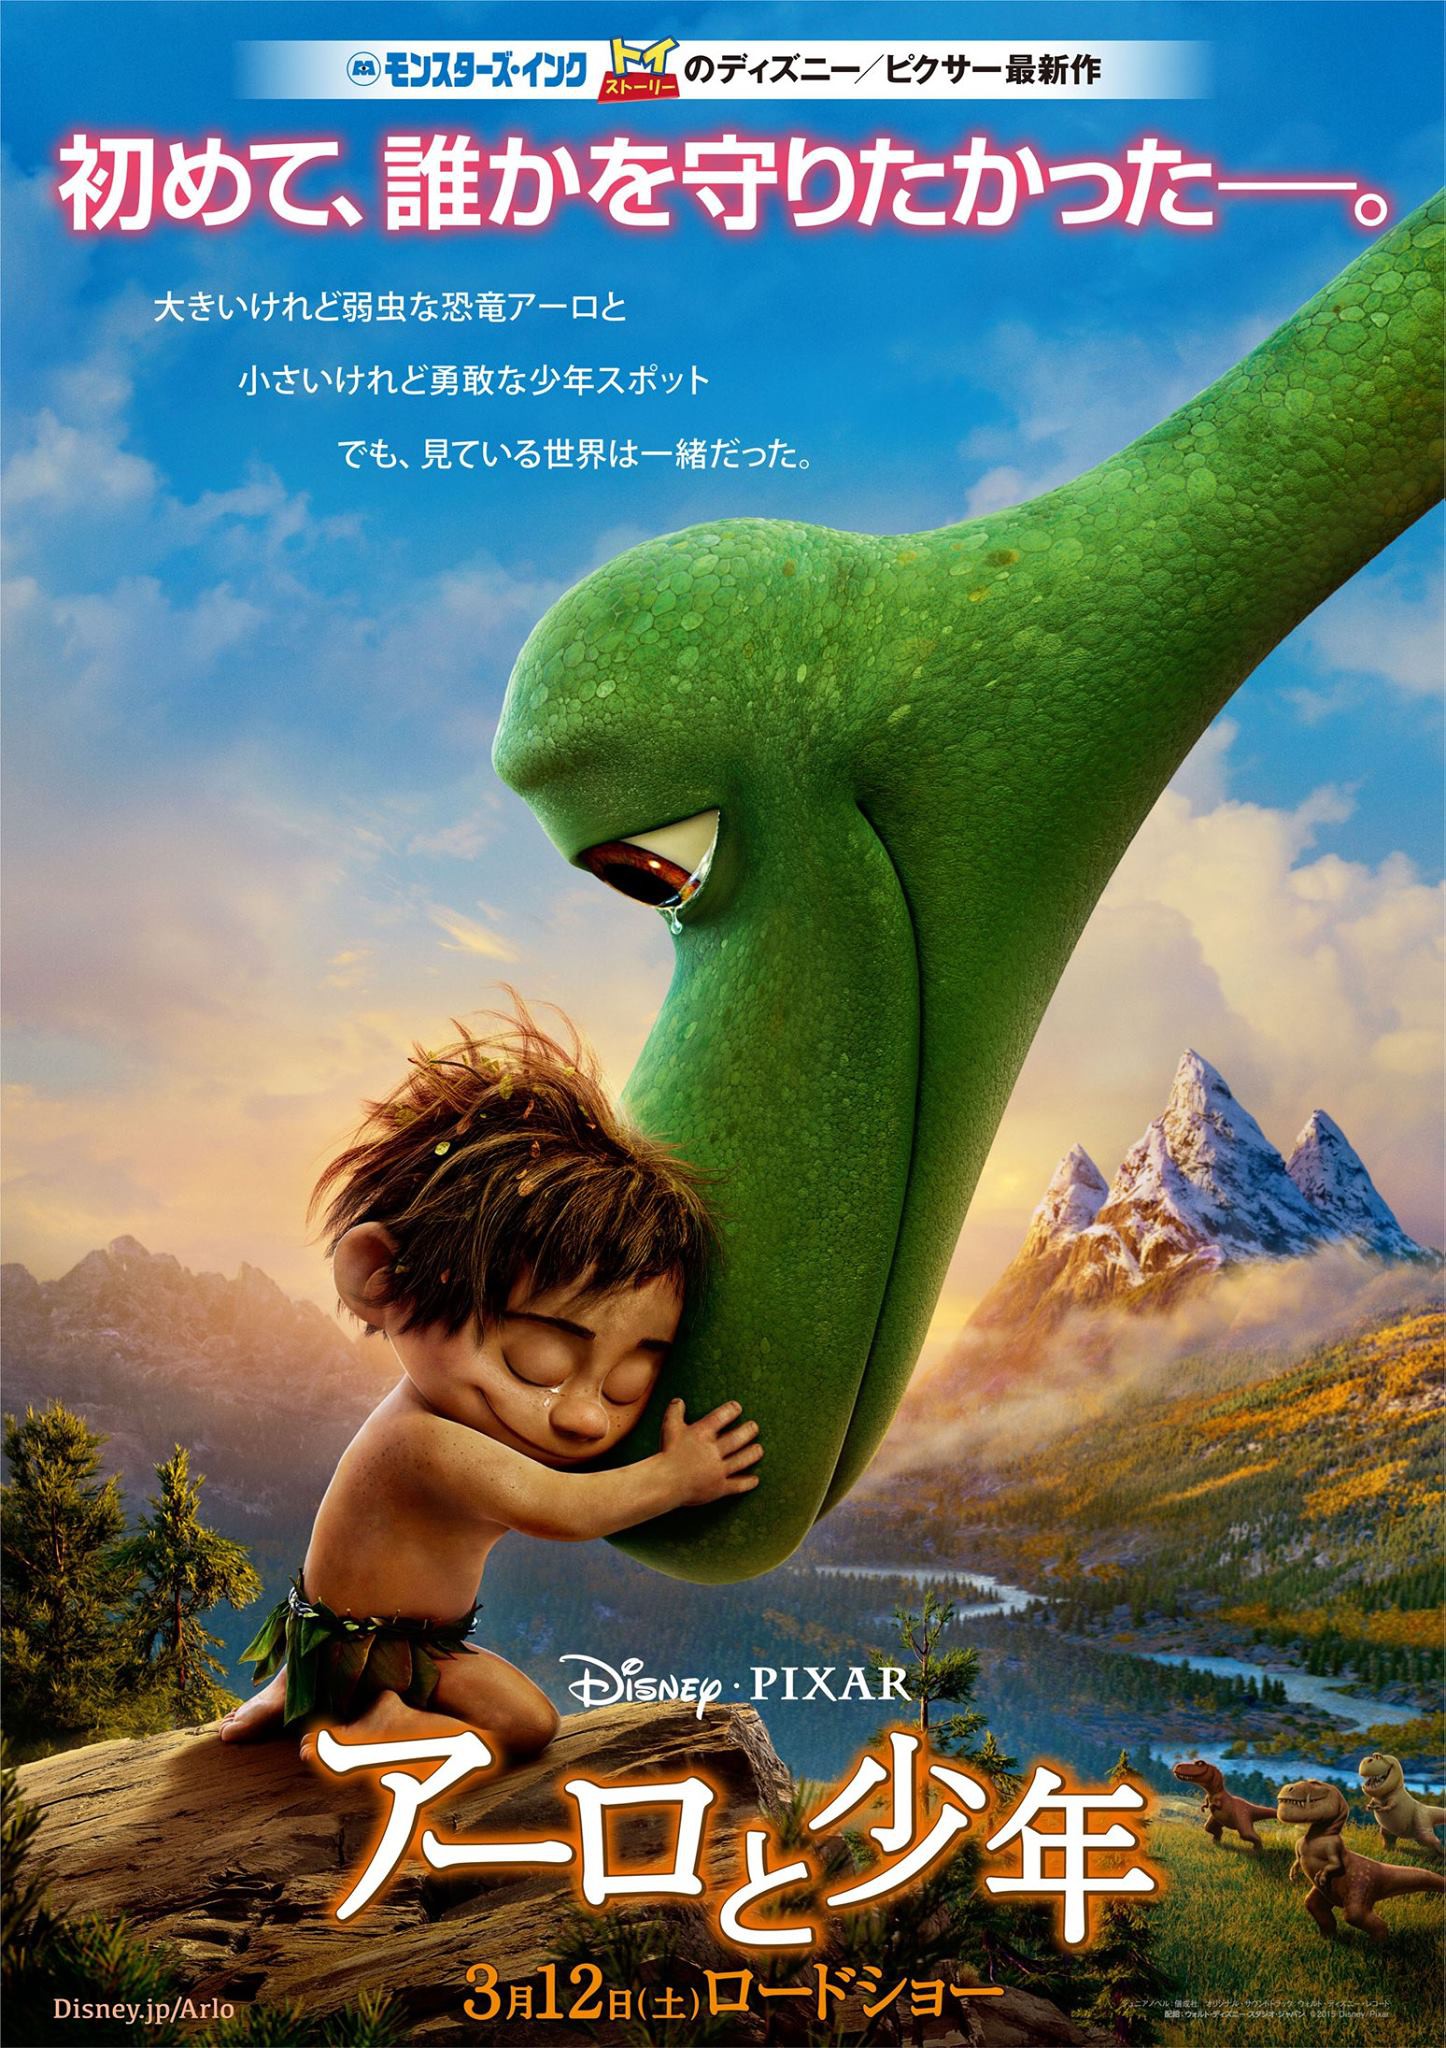 Mega Sized Movie Poster Image for The Good Dinosaur (#11 of 11)